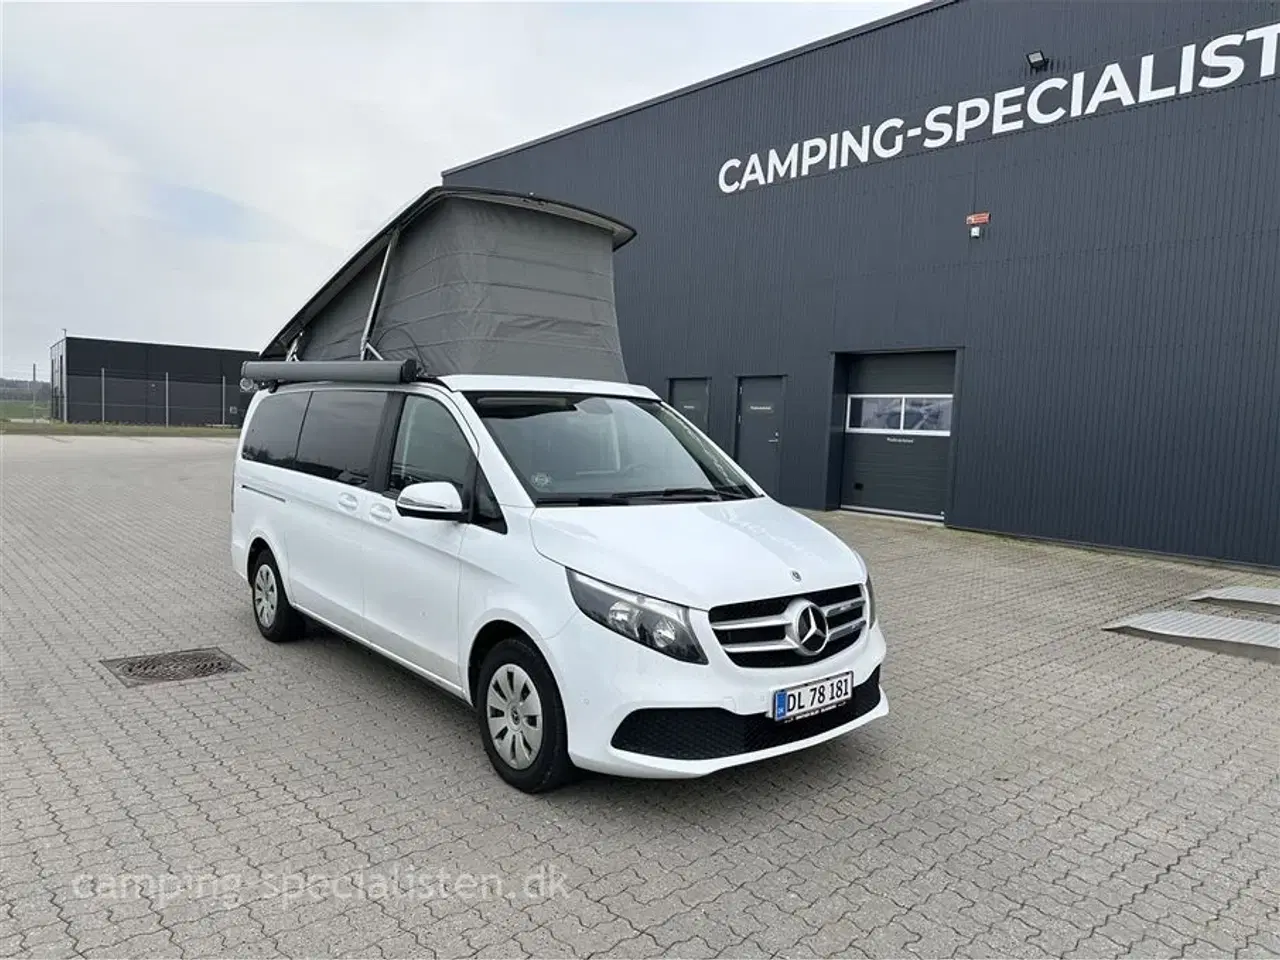 Billede 2 - 2022 - Mercedes Marcopolo / Viano V220    Mercedes  Marcopolo/Viano  V220 model 2022 kan nu ses hos Camping-Specialisten.dk